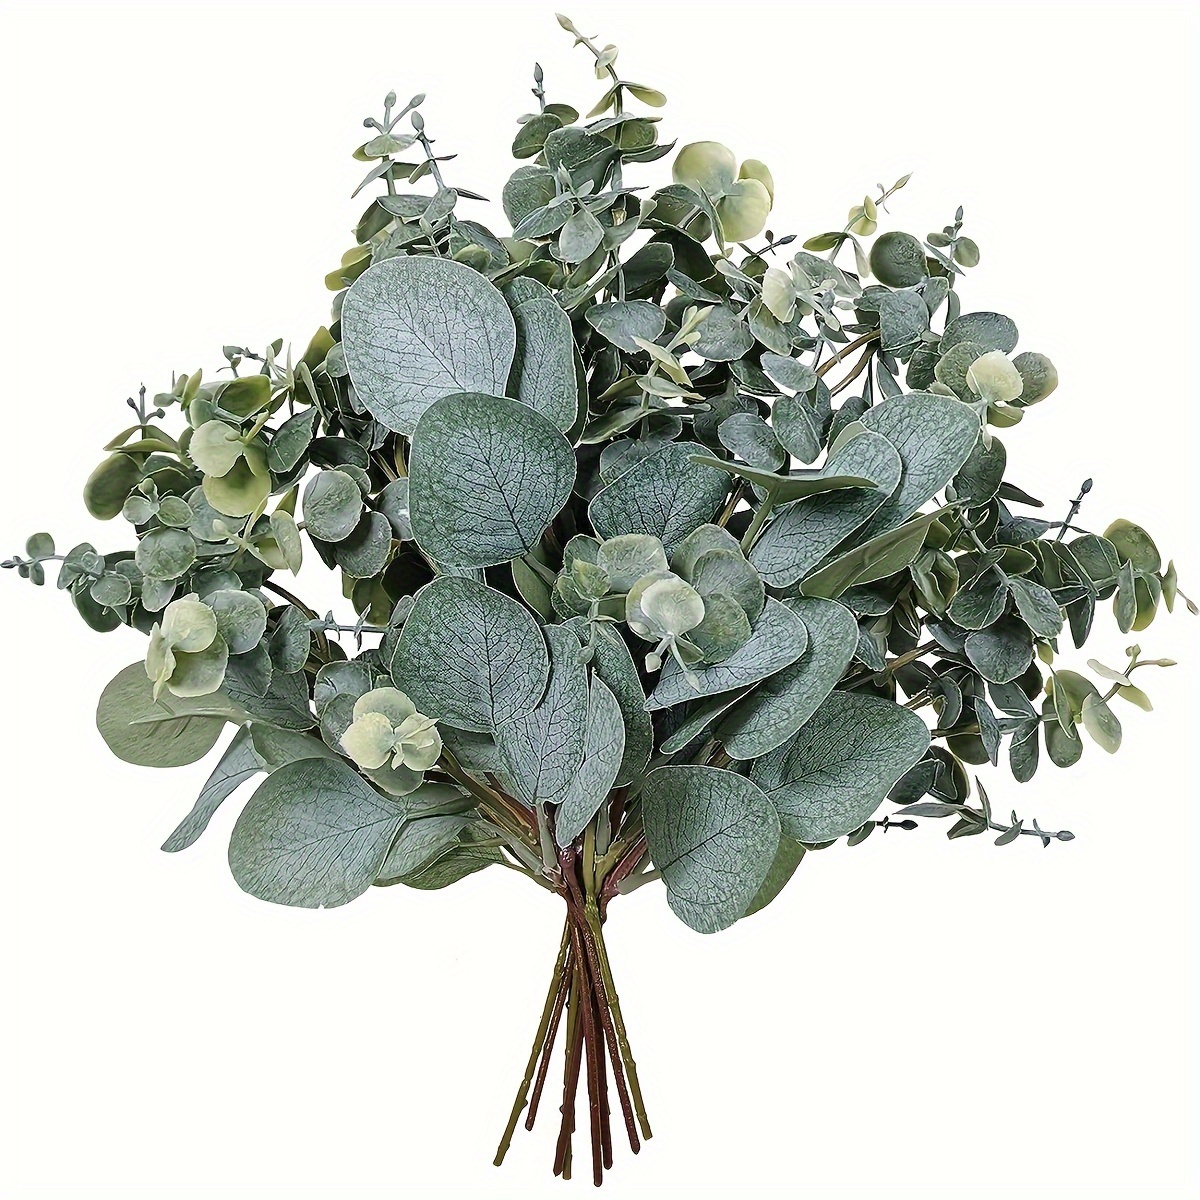 

10pcs Mixed Eucalyptus Leaves Stems, Bulk Artificial Silvery Dollar Picks Faux Branches For Vase Bouquet, Floral Arrangement Wreath Farmhouse Rustic Greenery Decor